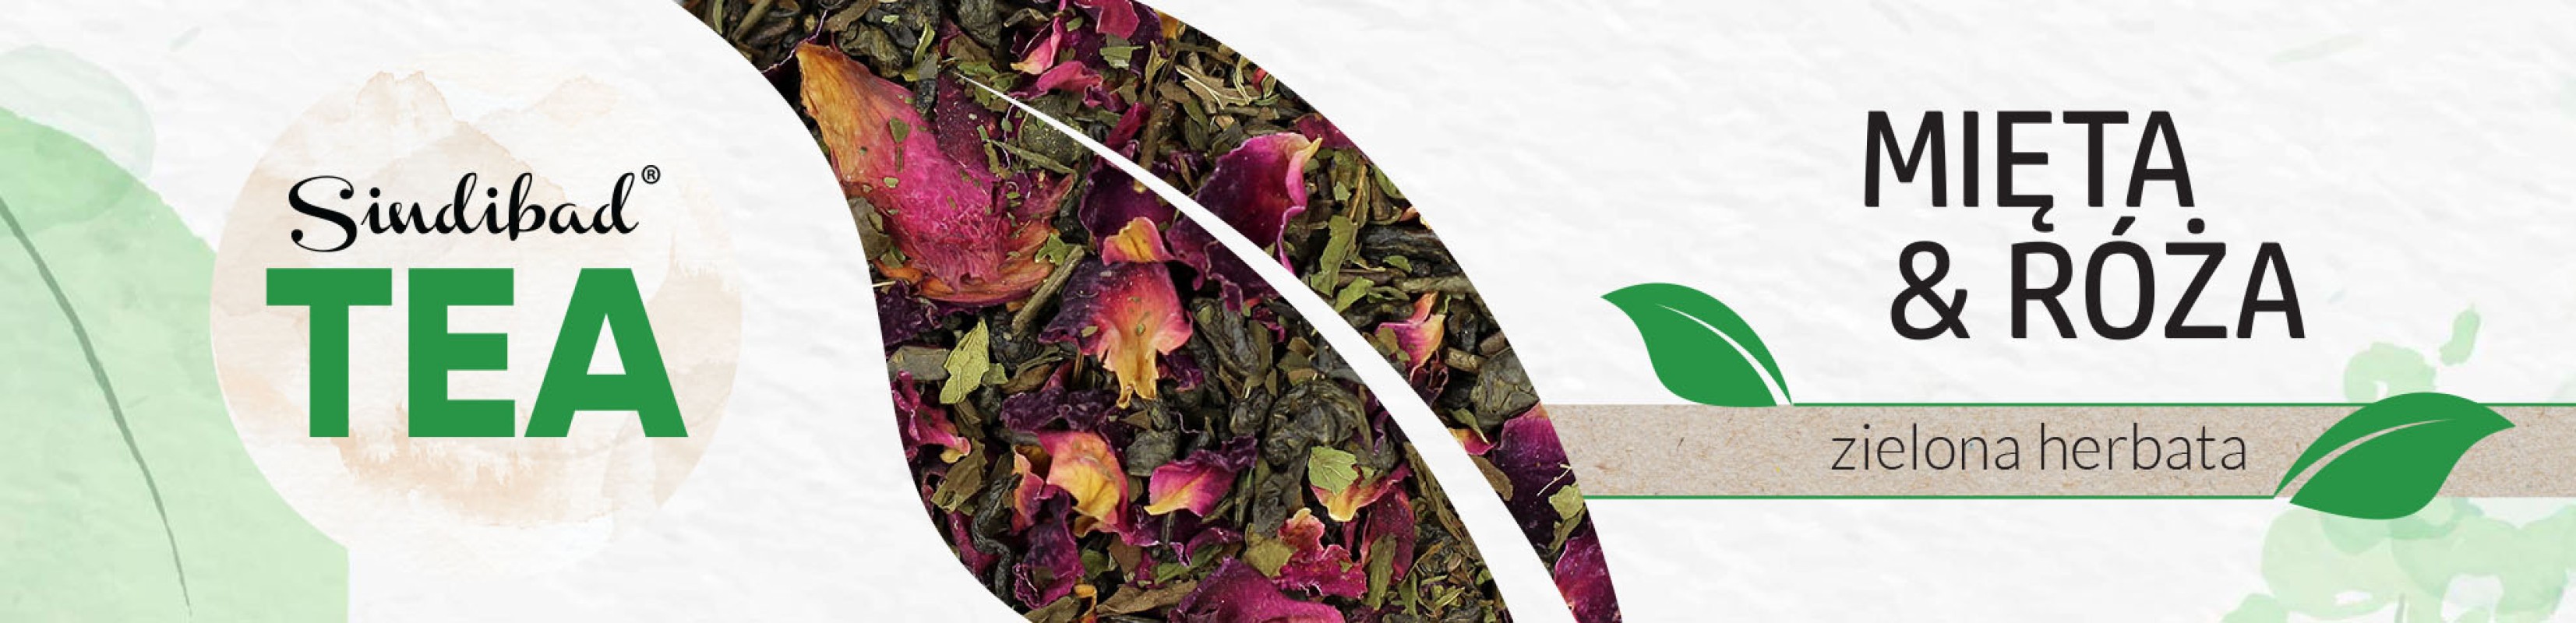 Mint & Rose Green Tea  45g | Sindibad